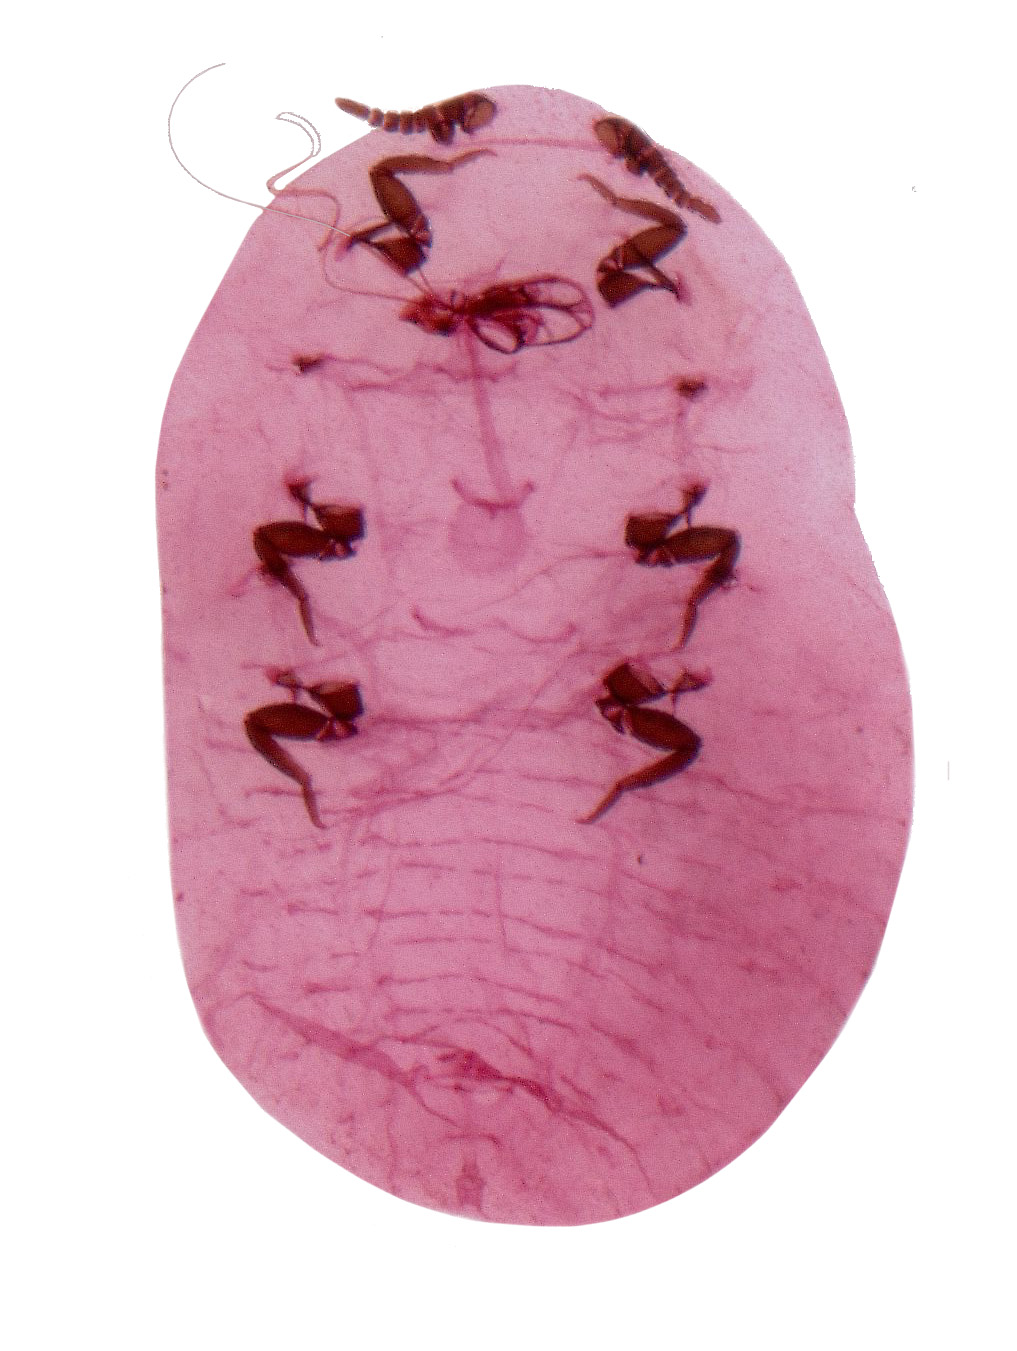  Marchalinidae:  Marchalina hellenica  